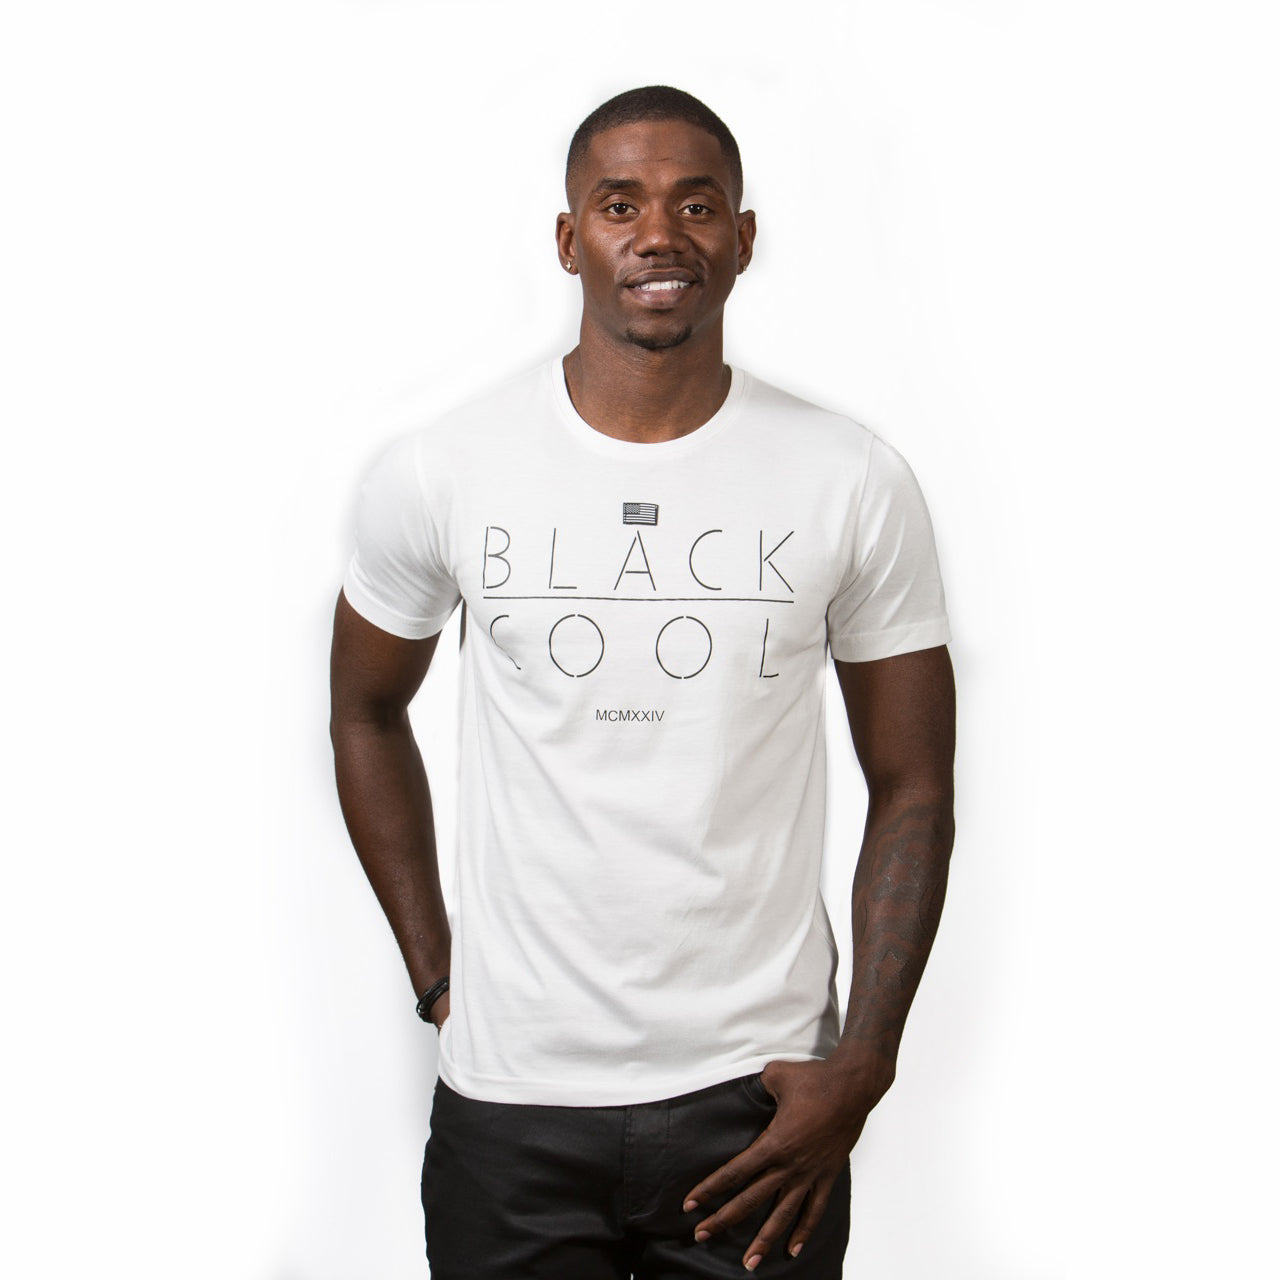 BlackCool - Signature T-Shirt - Ultra Premium Apparel & Accessories